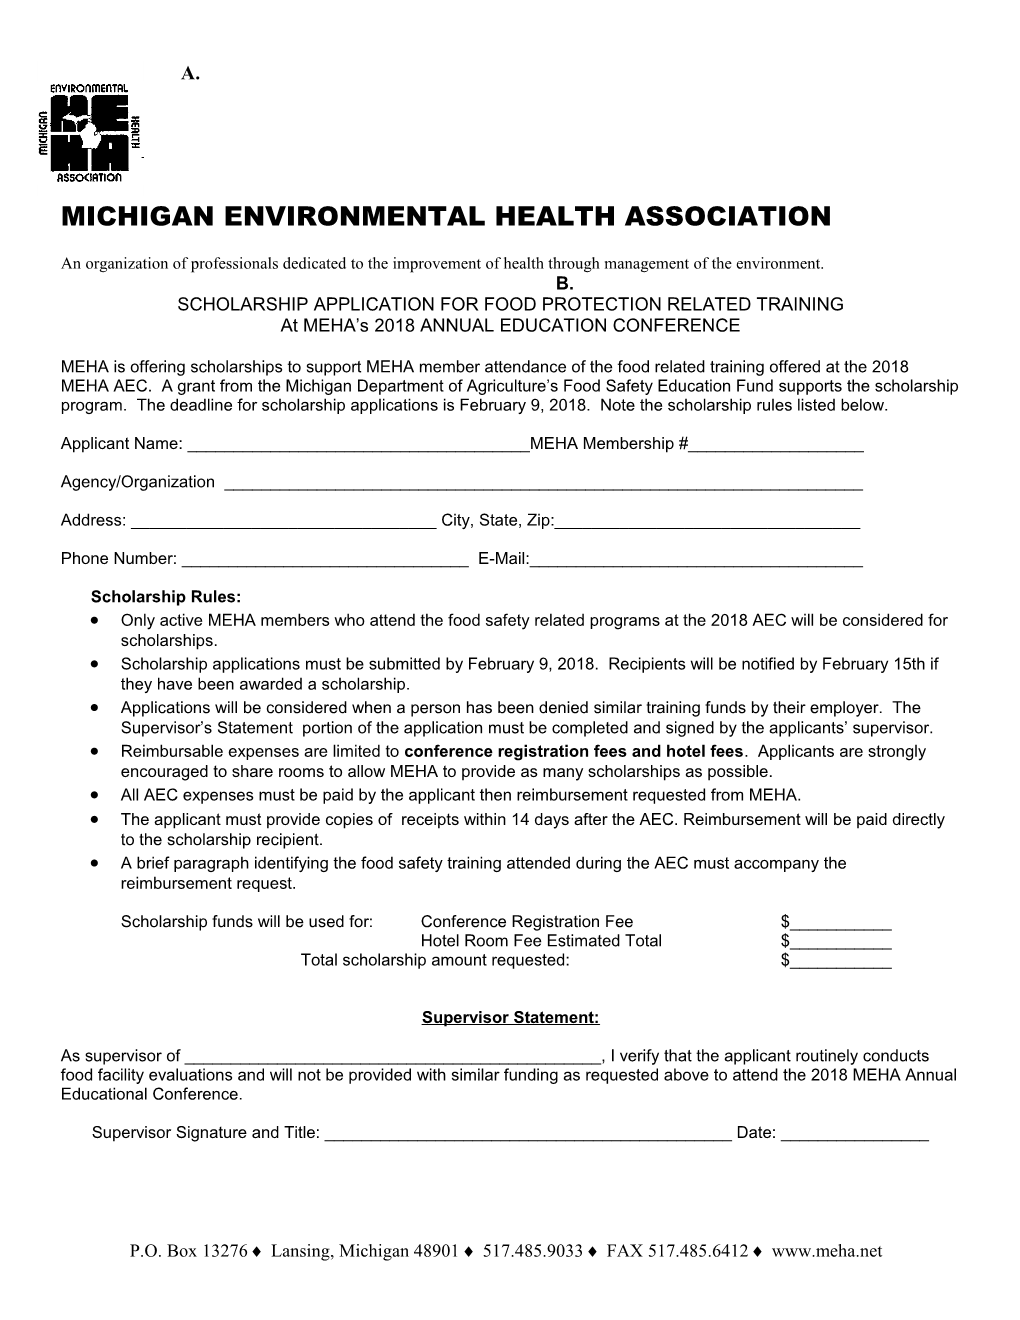 Michigan Environmental Health Association